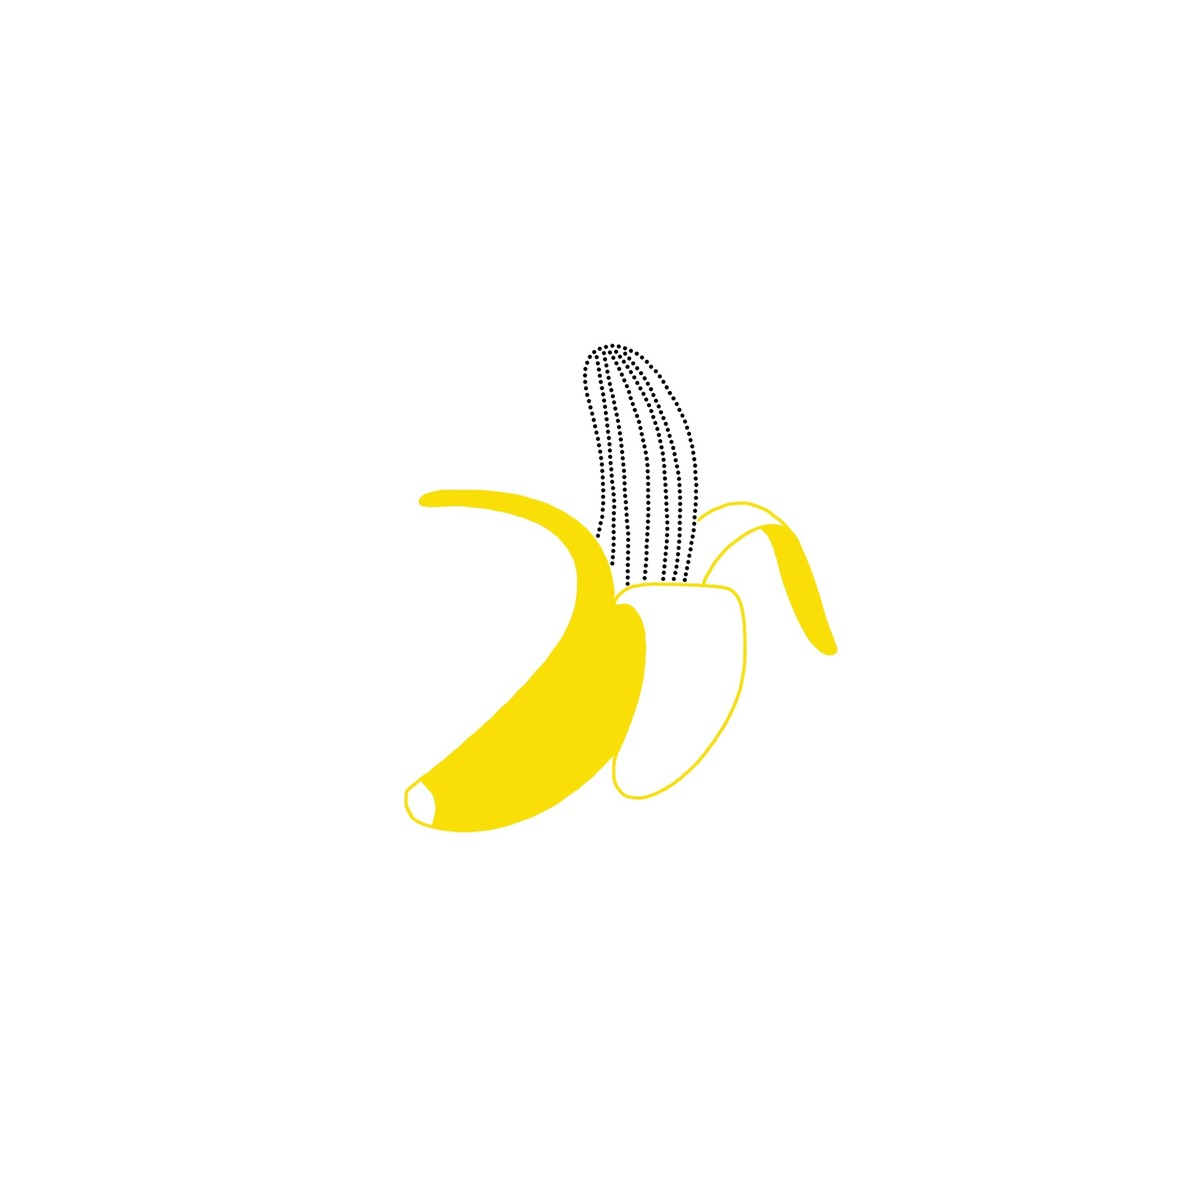 banana yamamoto